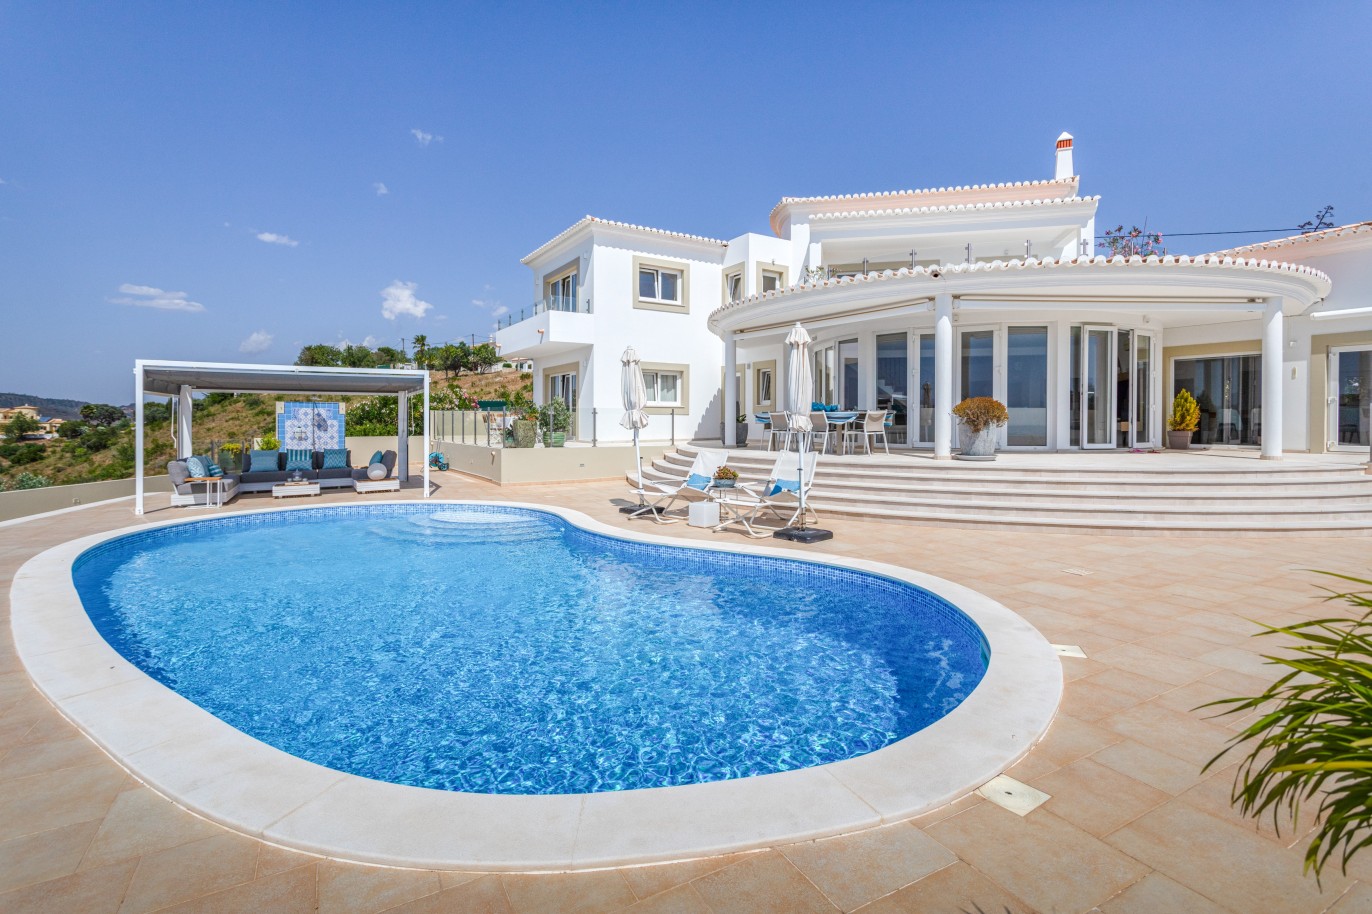 4 Bedroom Luxury Villa with pool for sale in Silves, Algarve_227363